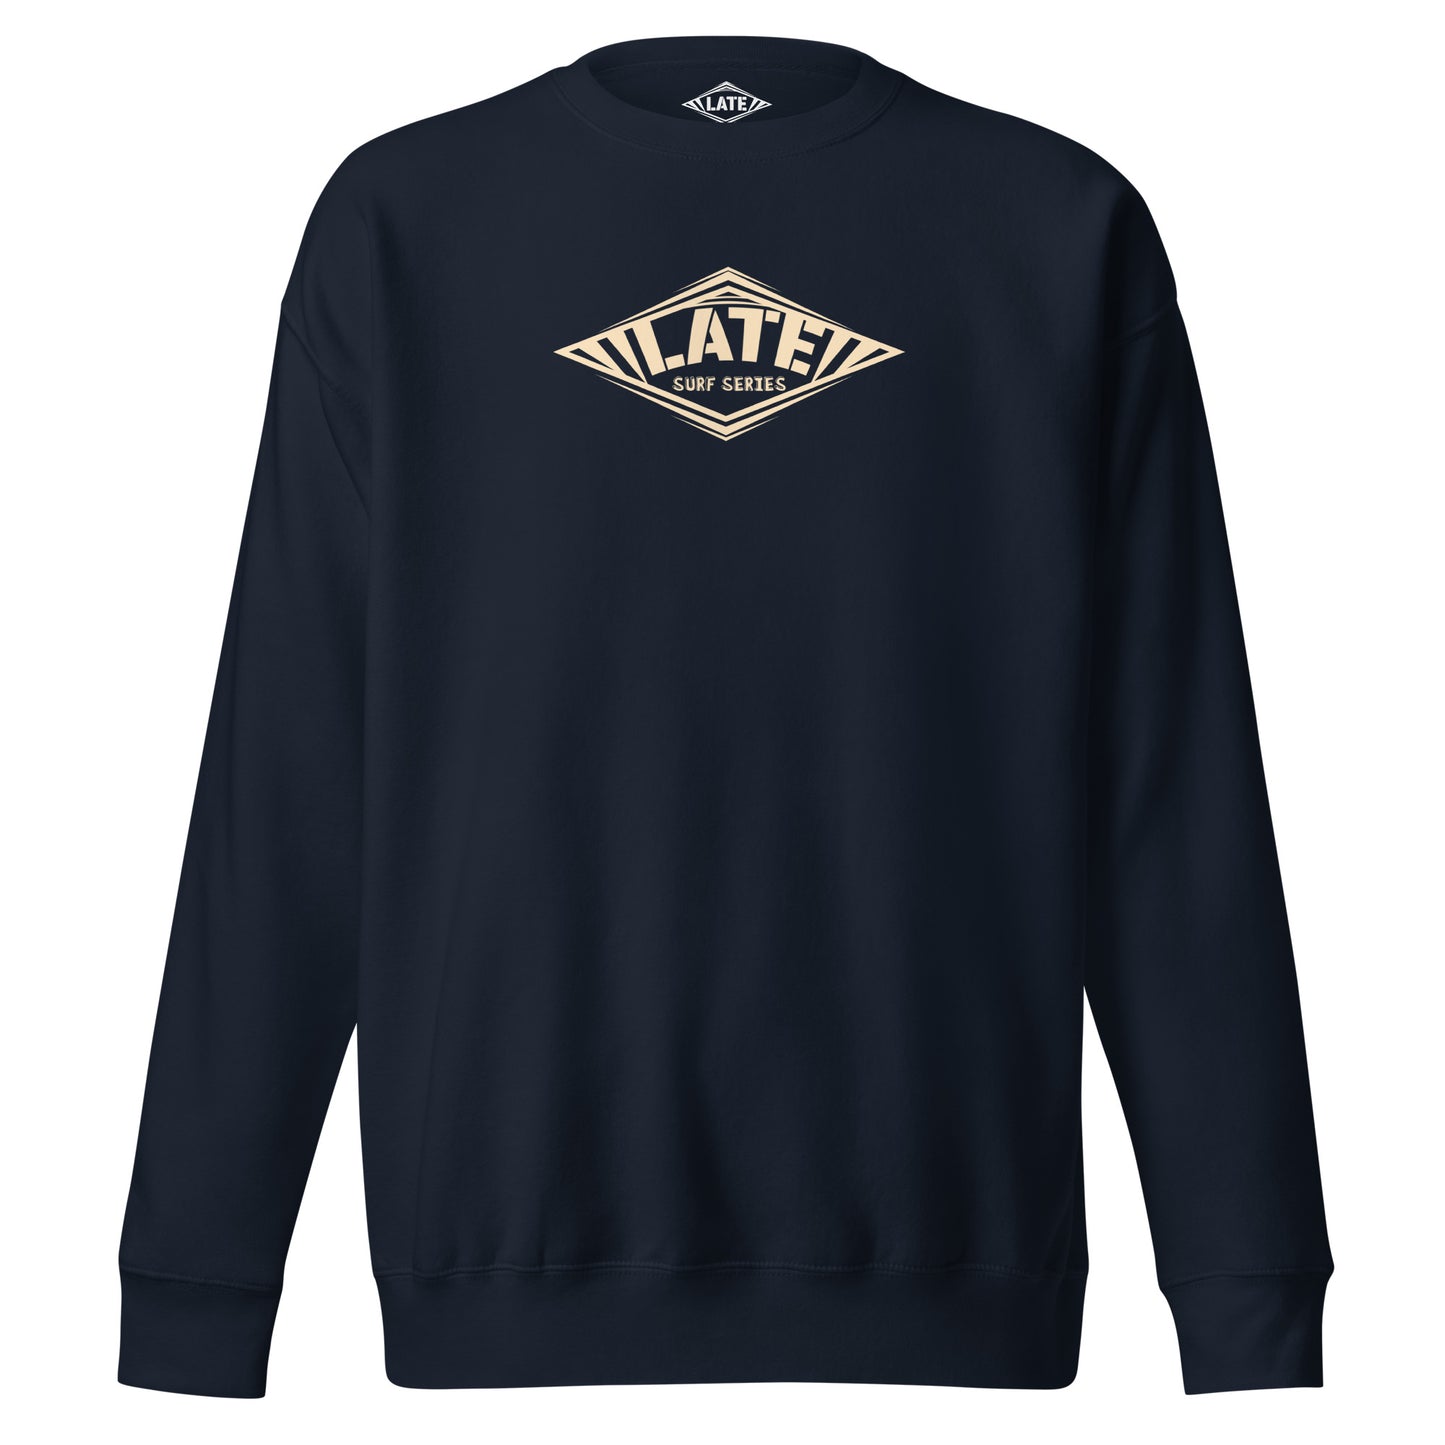 Sweatshirt Take On The Elements surf series logo Late sweat unisex navy